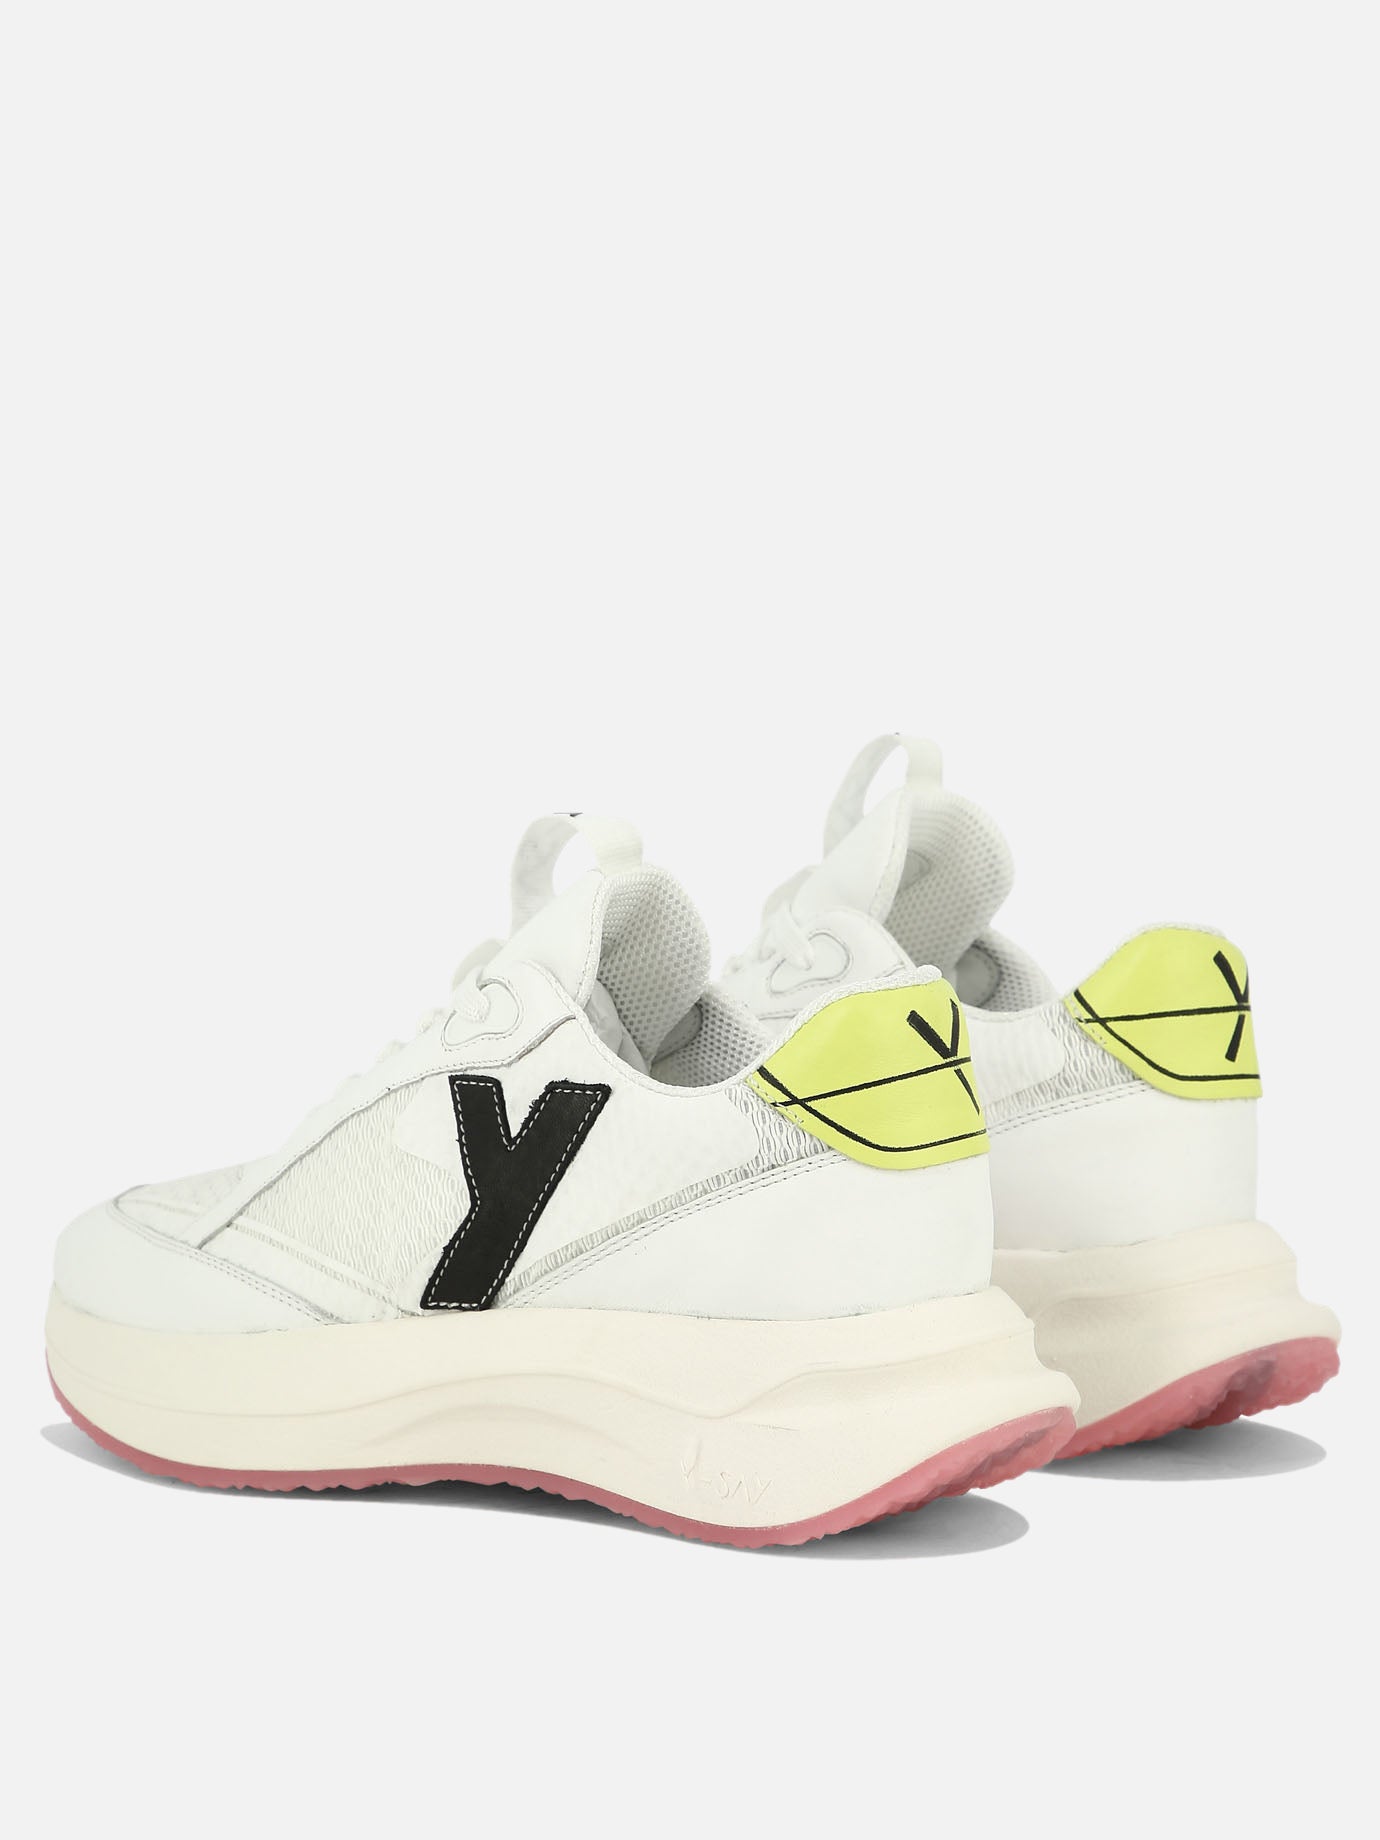 "Yuma" sneakers